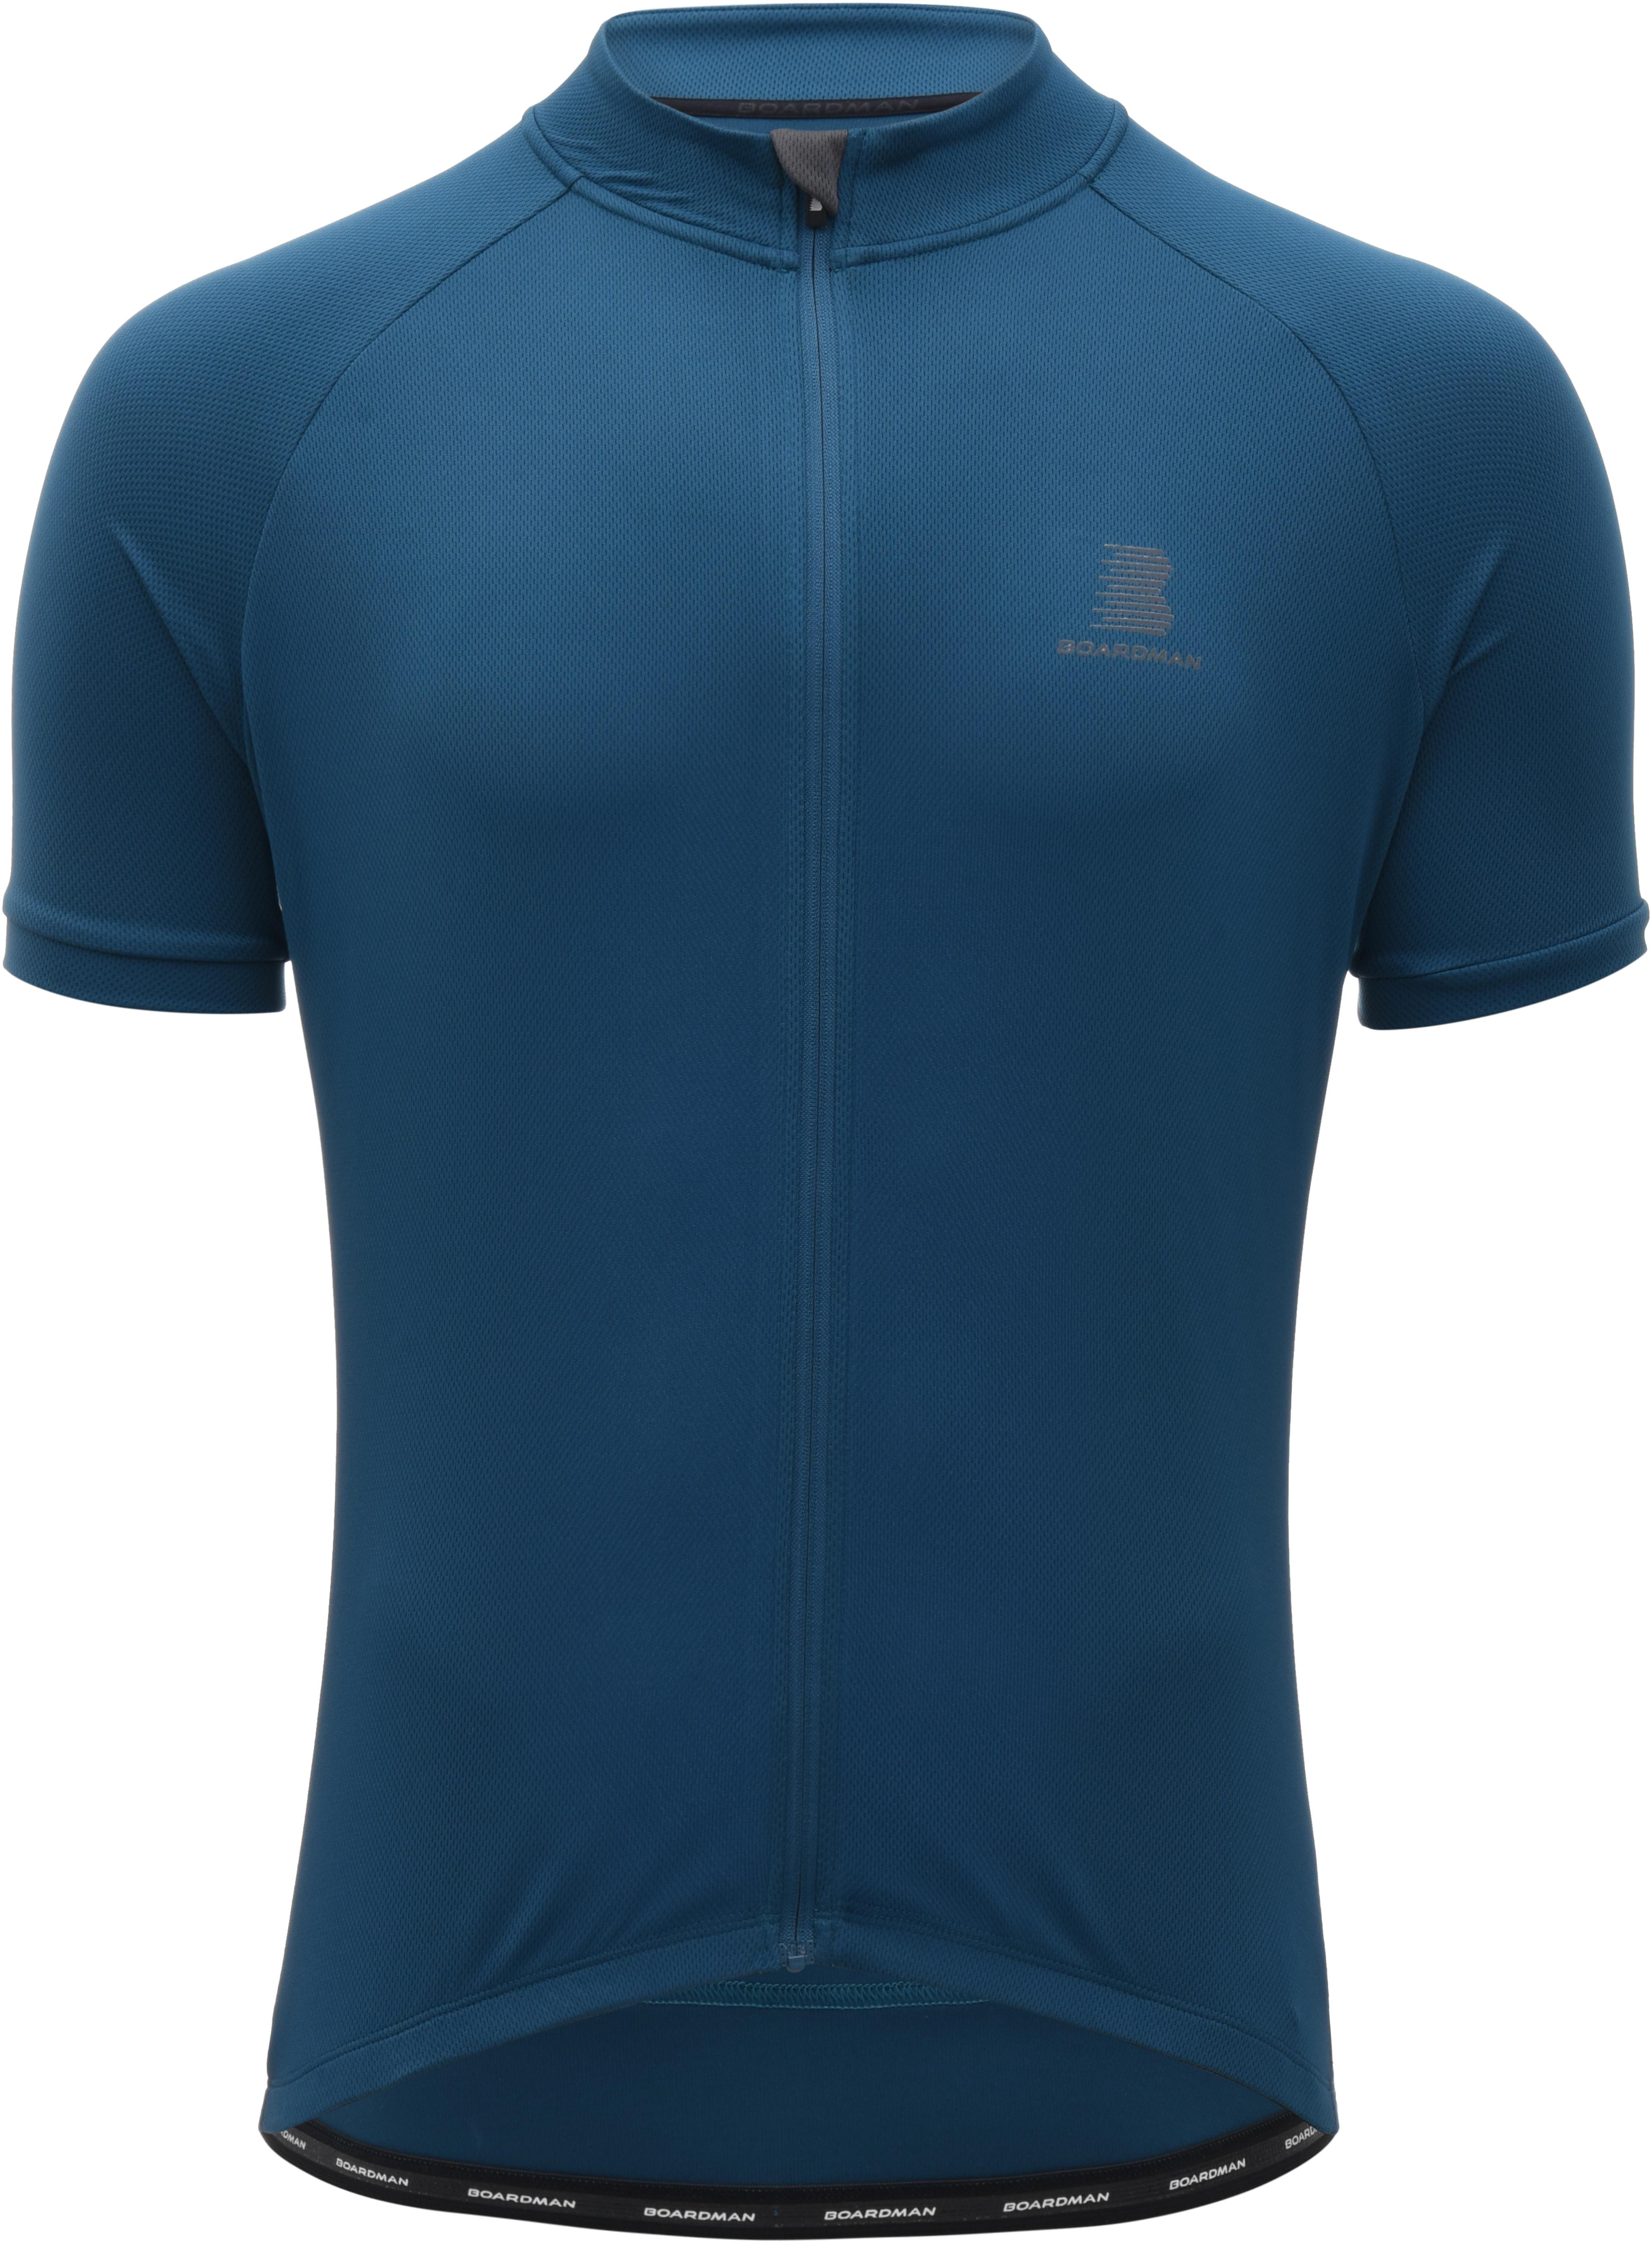 Boardman Mens Cycling Jersey - Blue Small